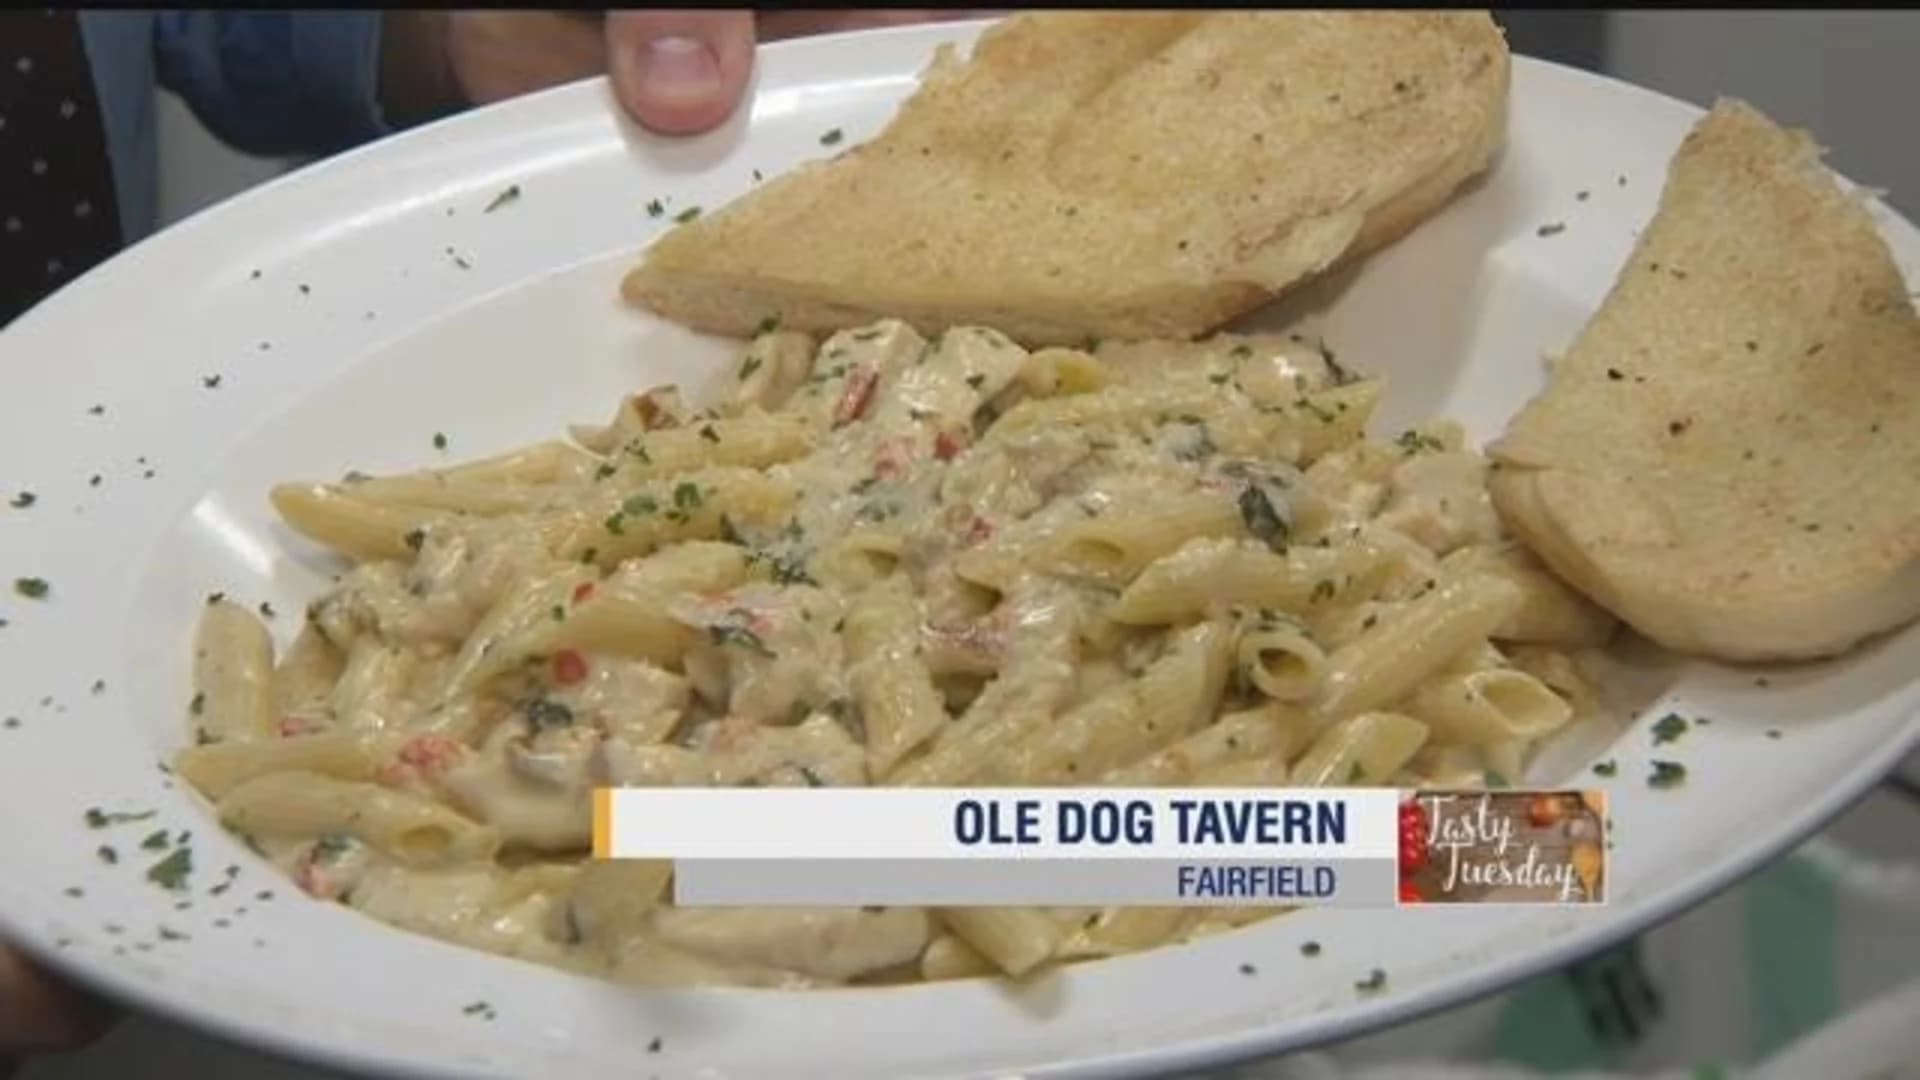 Tasty Tuesday: Ole Dog Tavern